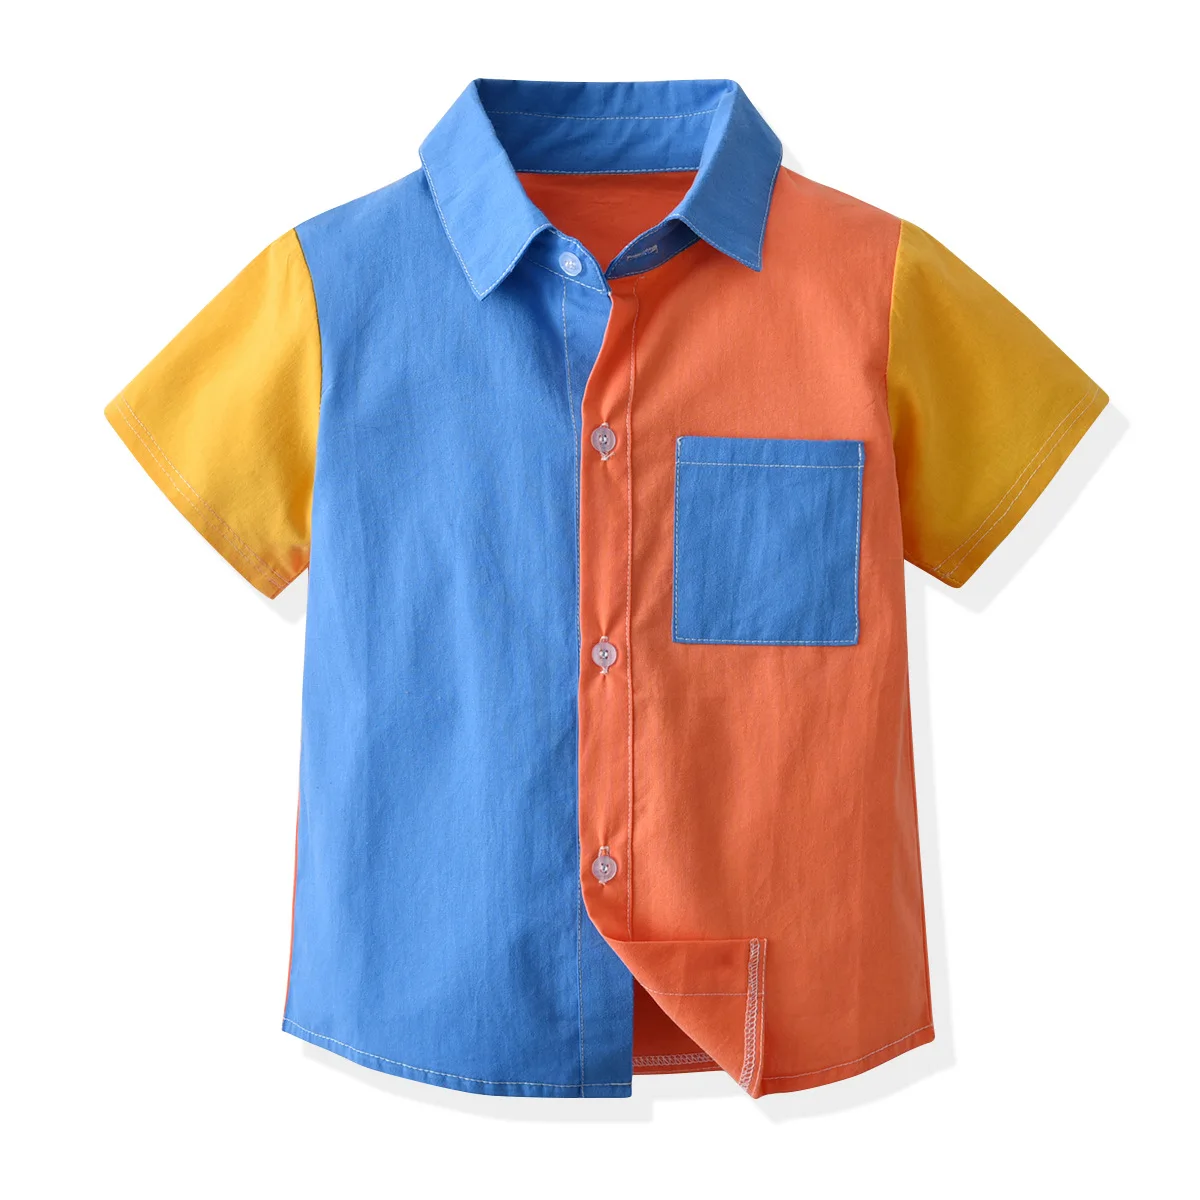 Source Hot Sell Splice Pattern Boys Formal Shirts Short Sleeves Beach Activity Top Shirt on m.alibaba.com